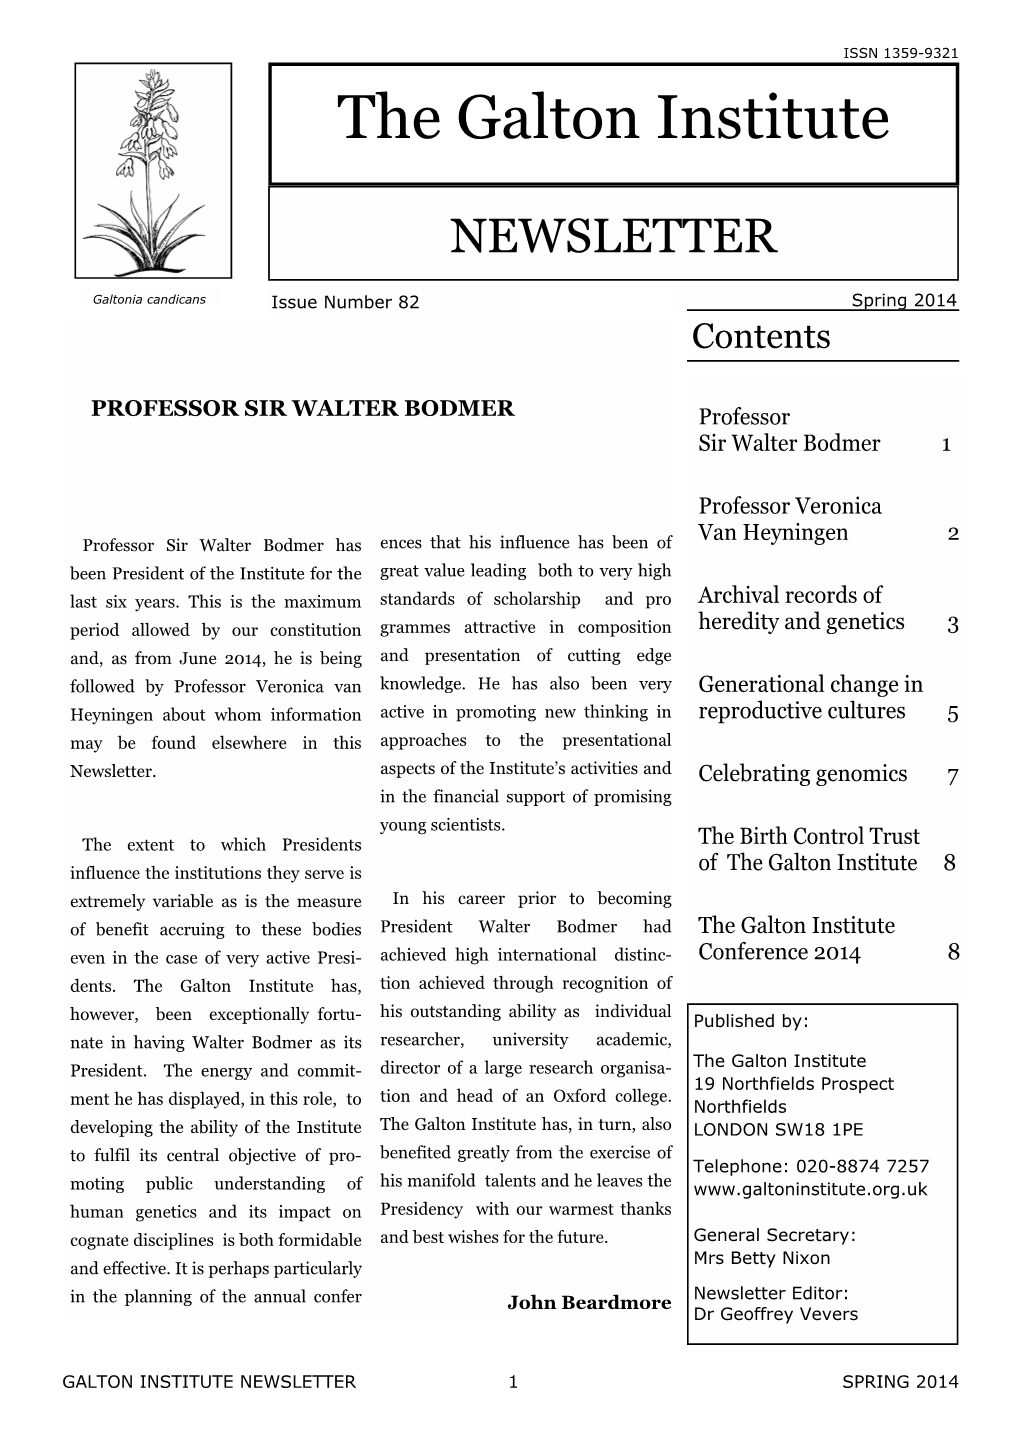 Galton Institute Newsletter 1 Spring 2014